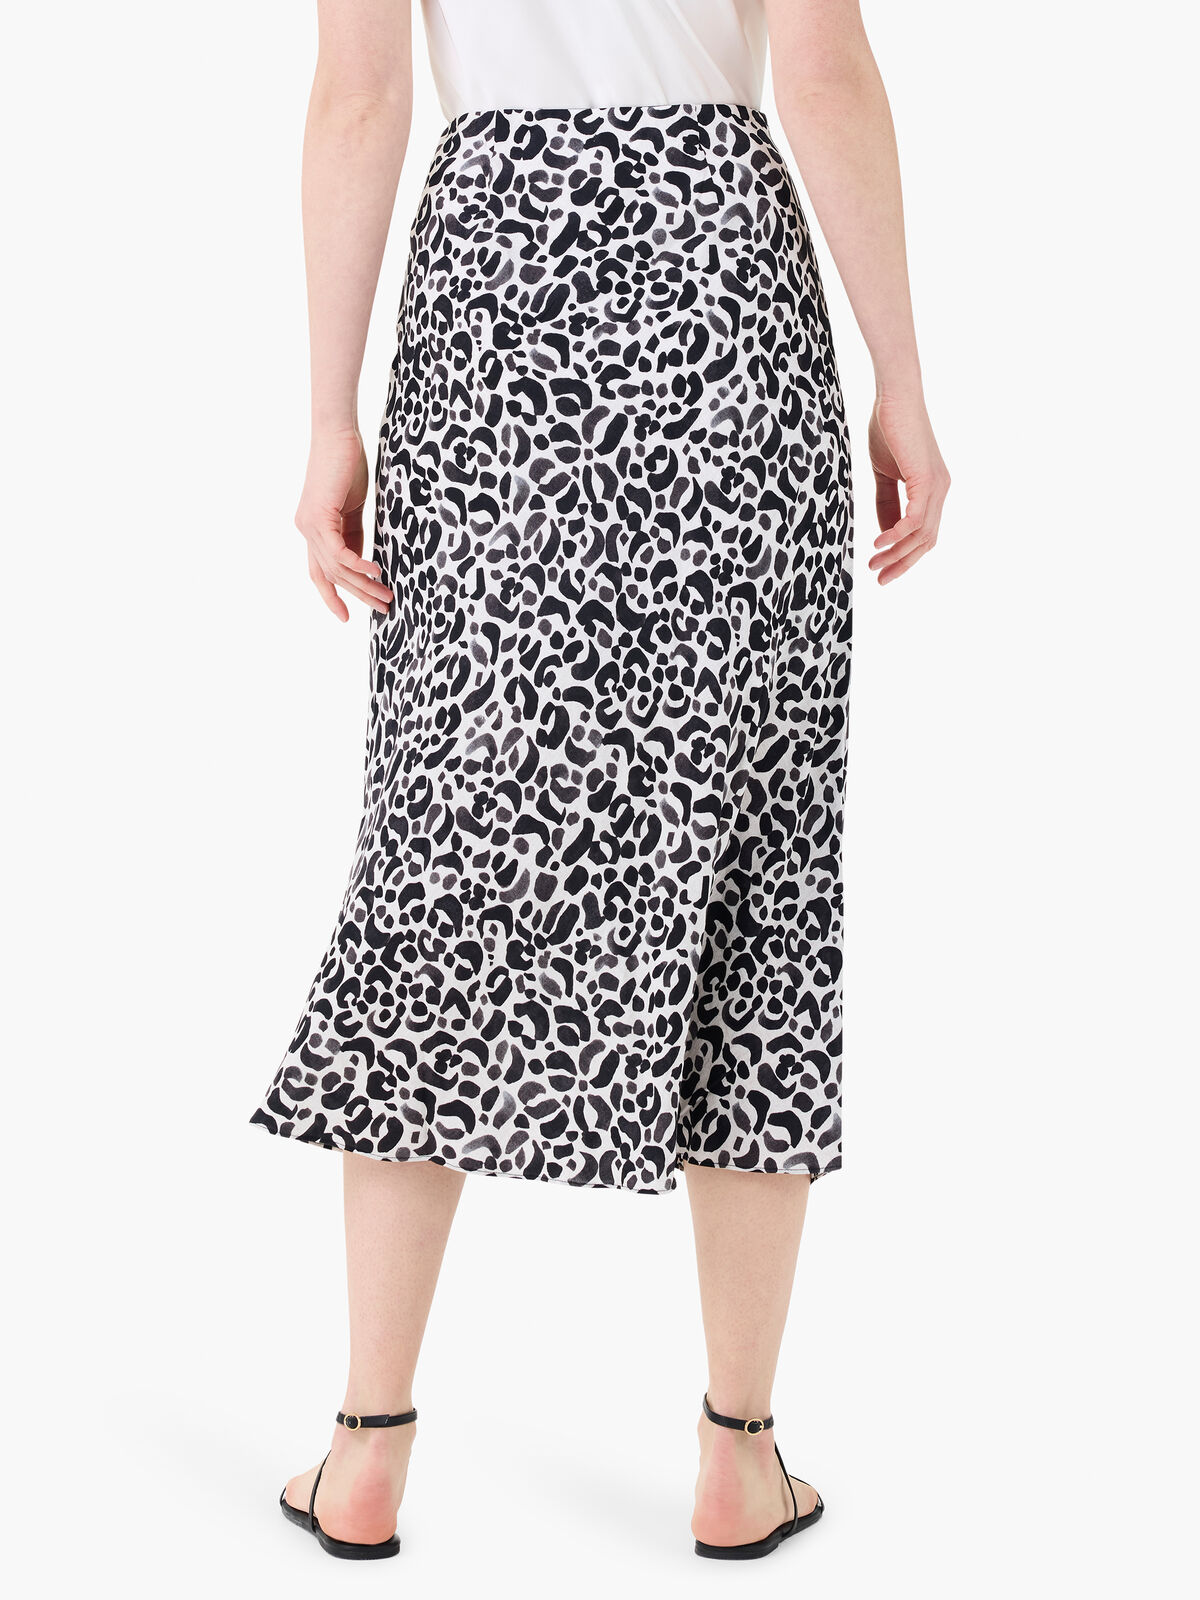 Onyx Animal Slip Skirt